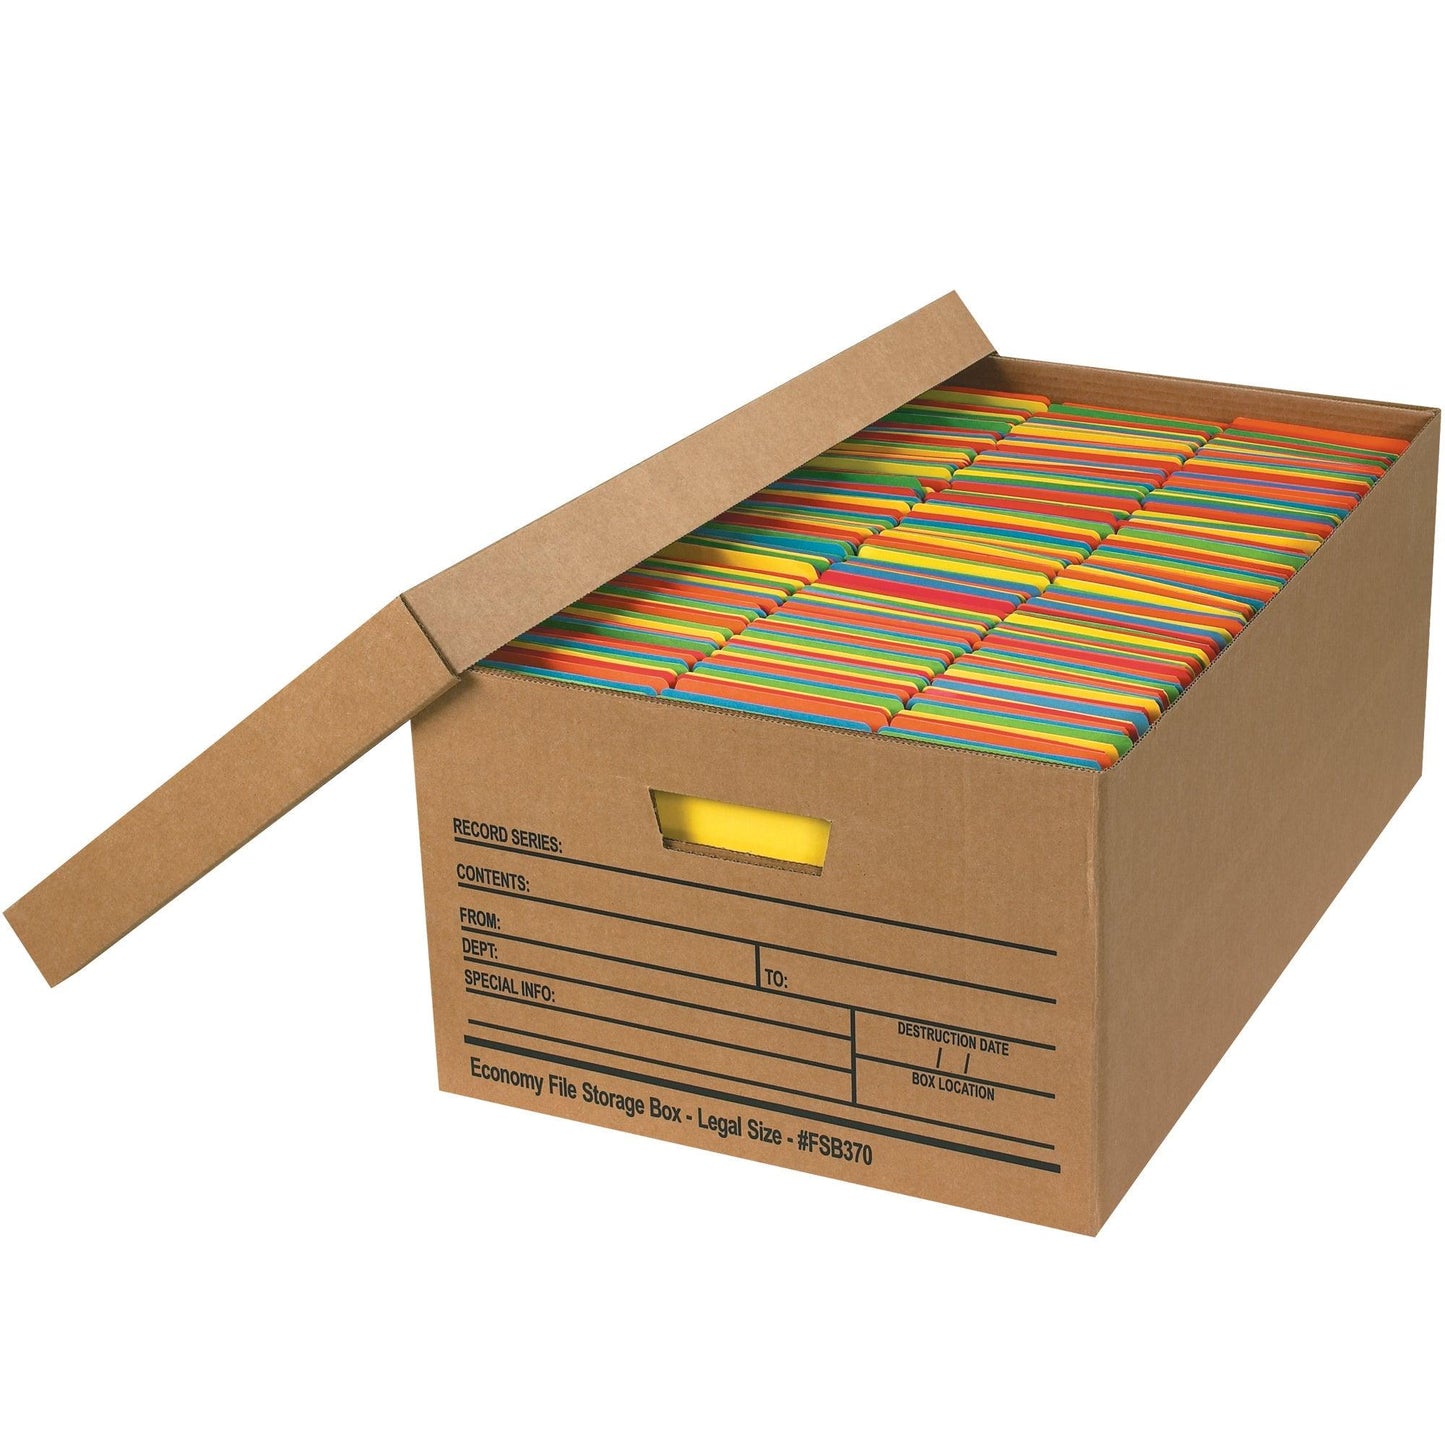 24 x 15 x 10" Economy File Storage Boxes - FSB370